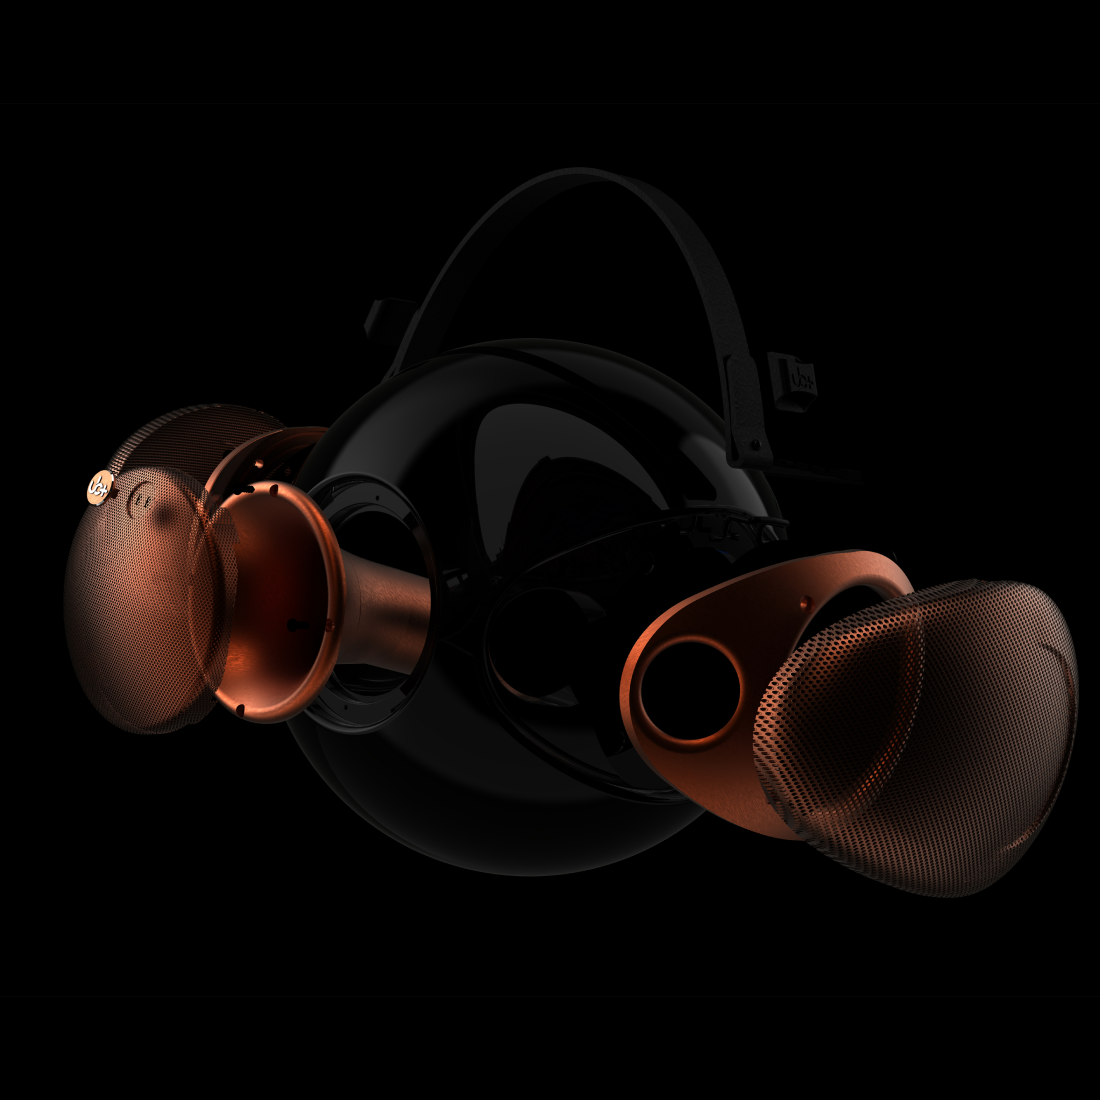 UB+ S2+ ALPHORN Black Bluetooth speaker showing the design of its internal structure